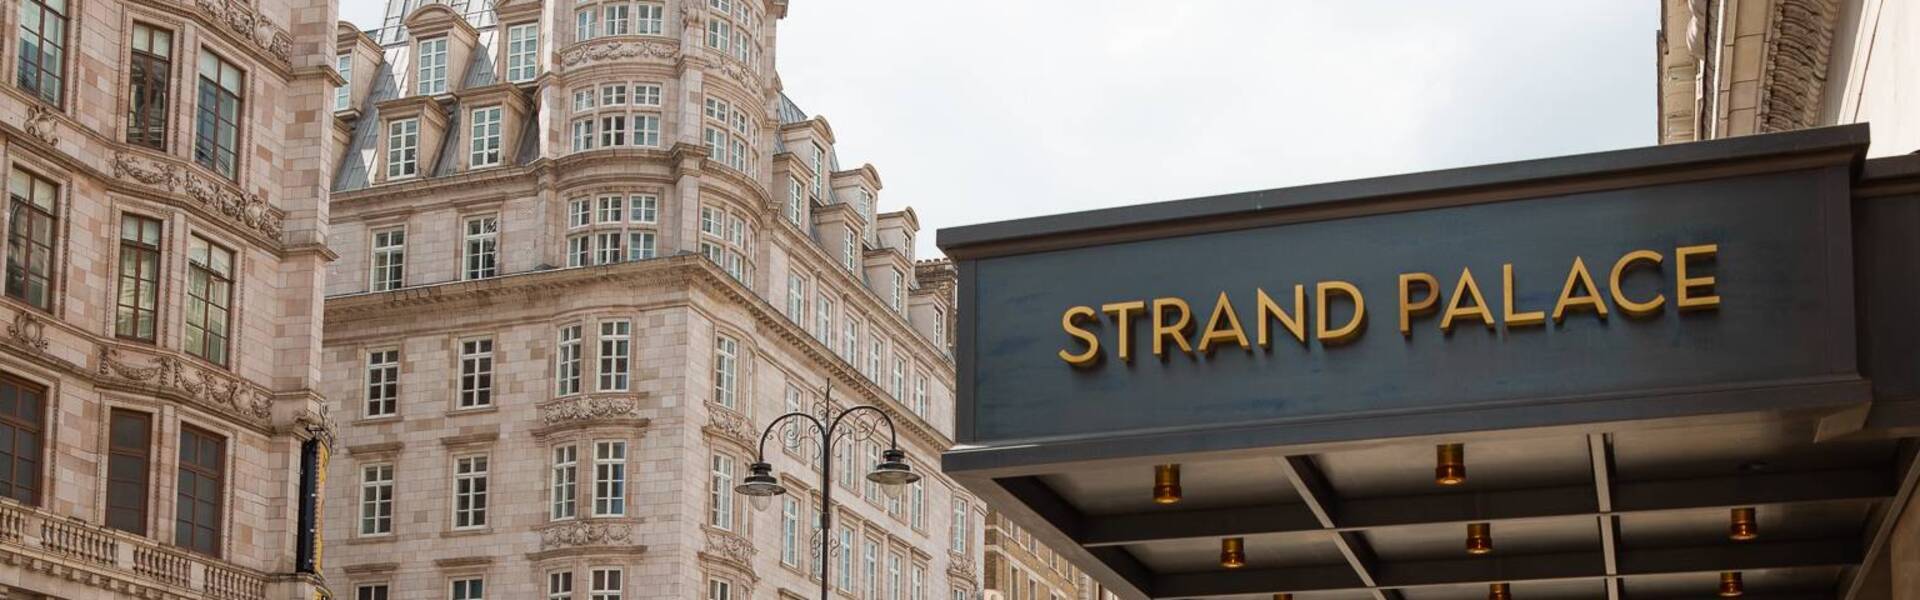 Strand_Palace_Hotel_London_1920x600